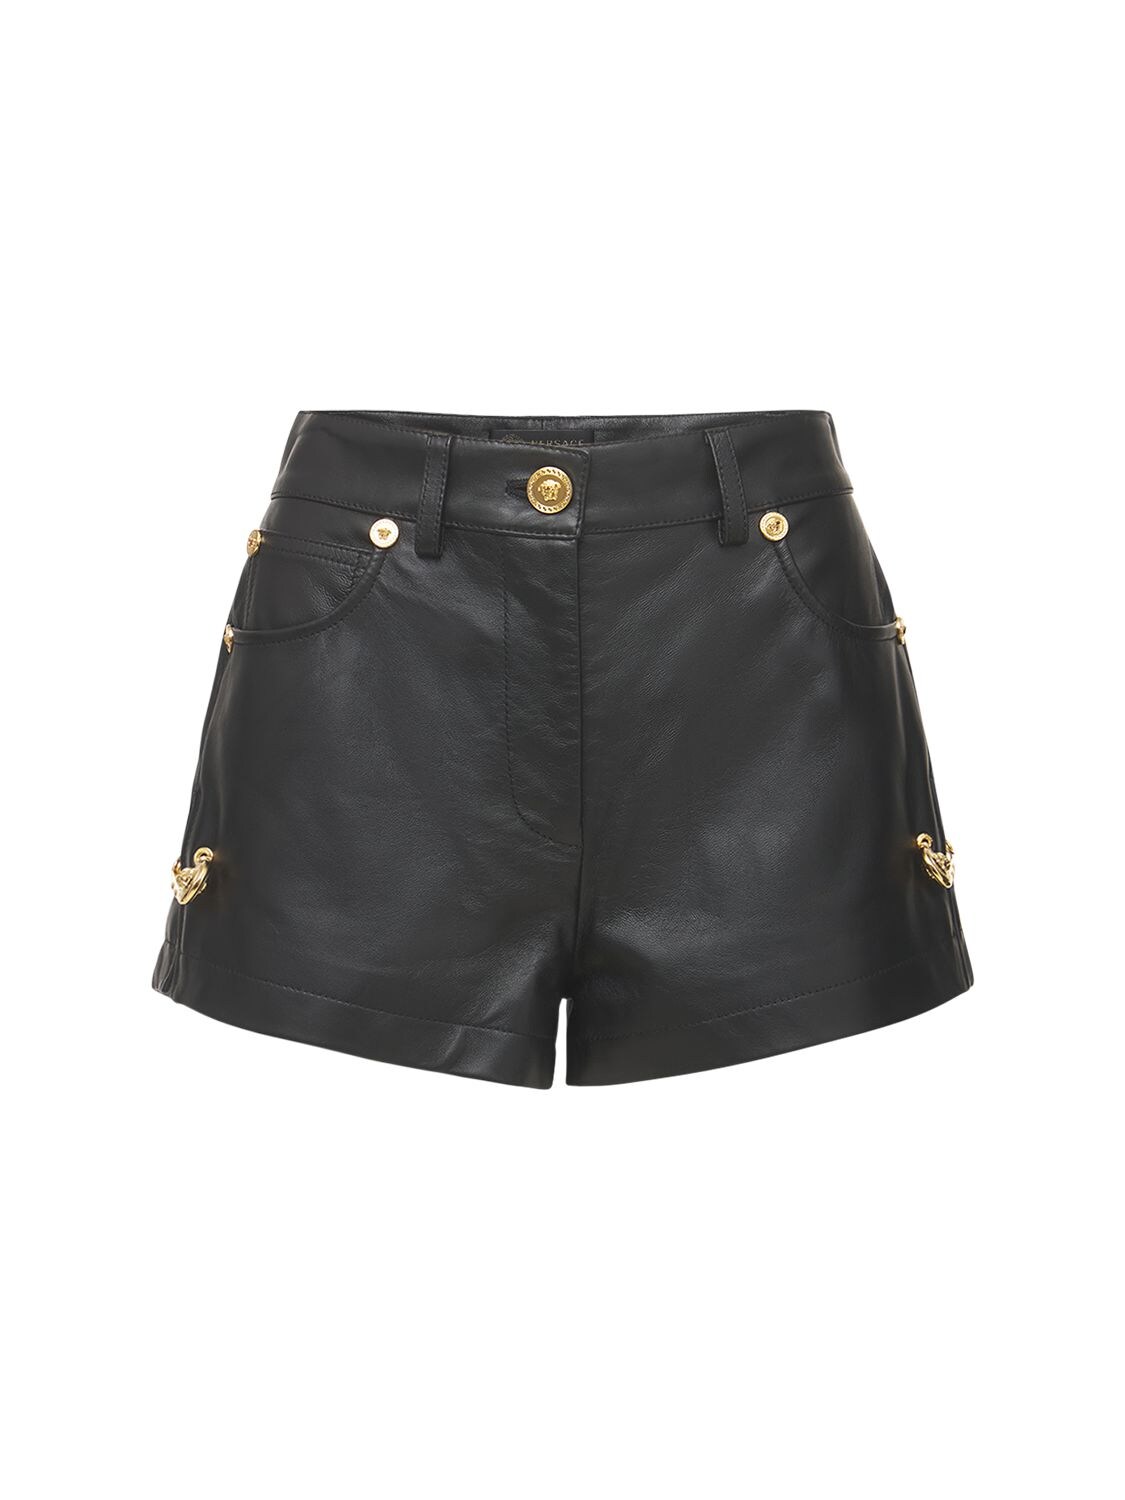 Safety Pin Nappa Leather Shorts